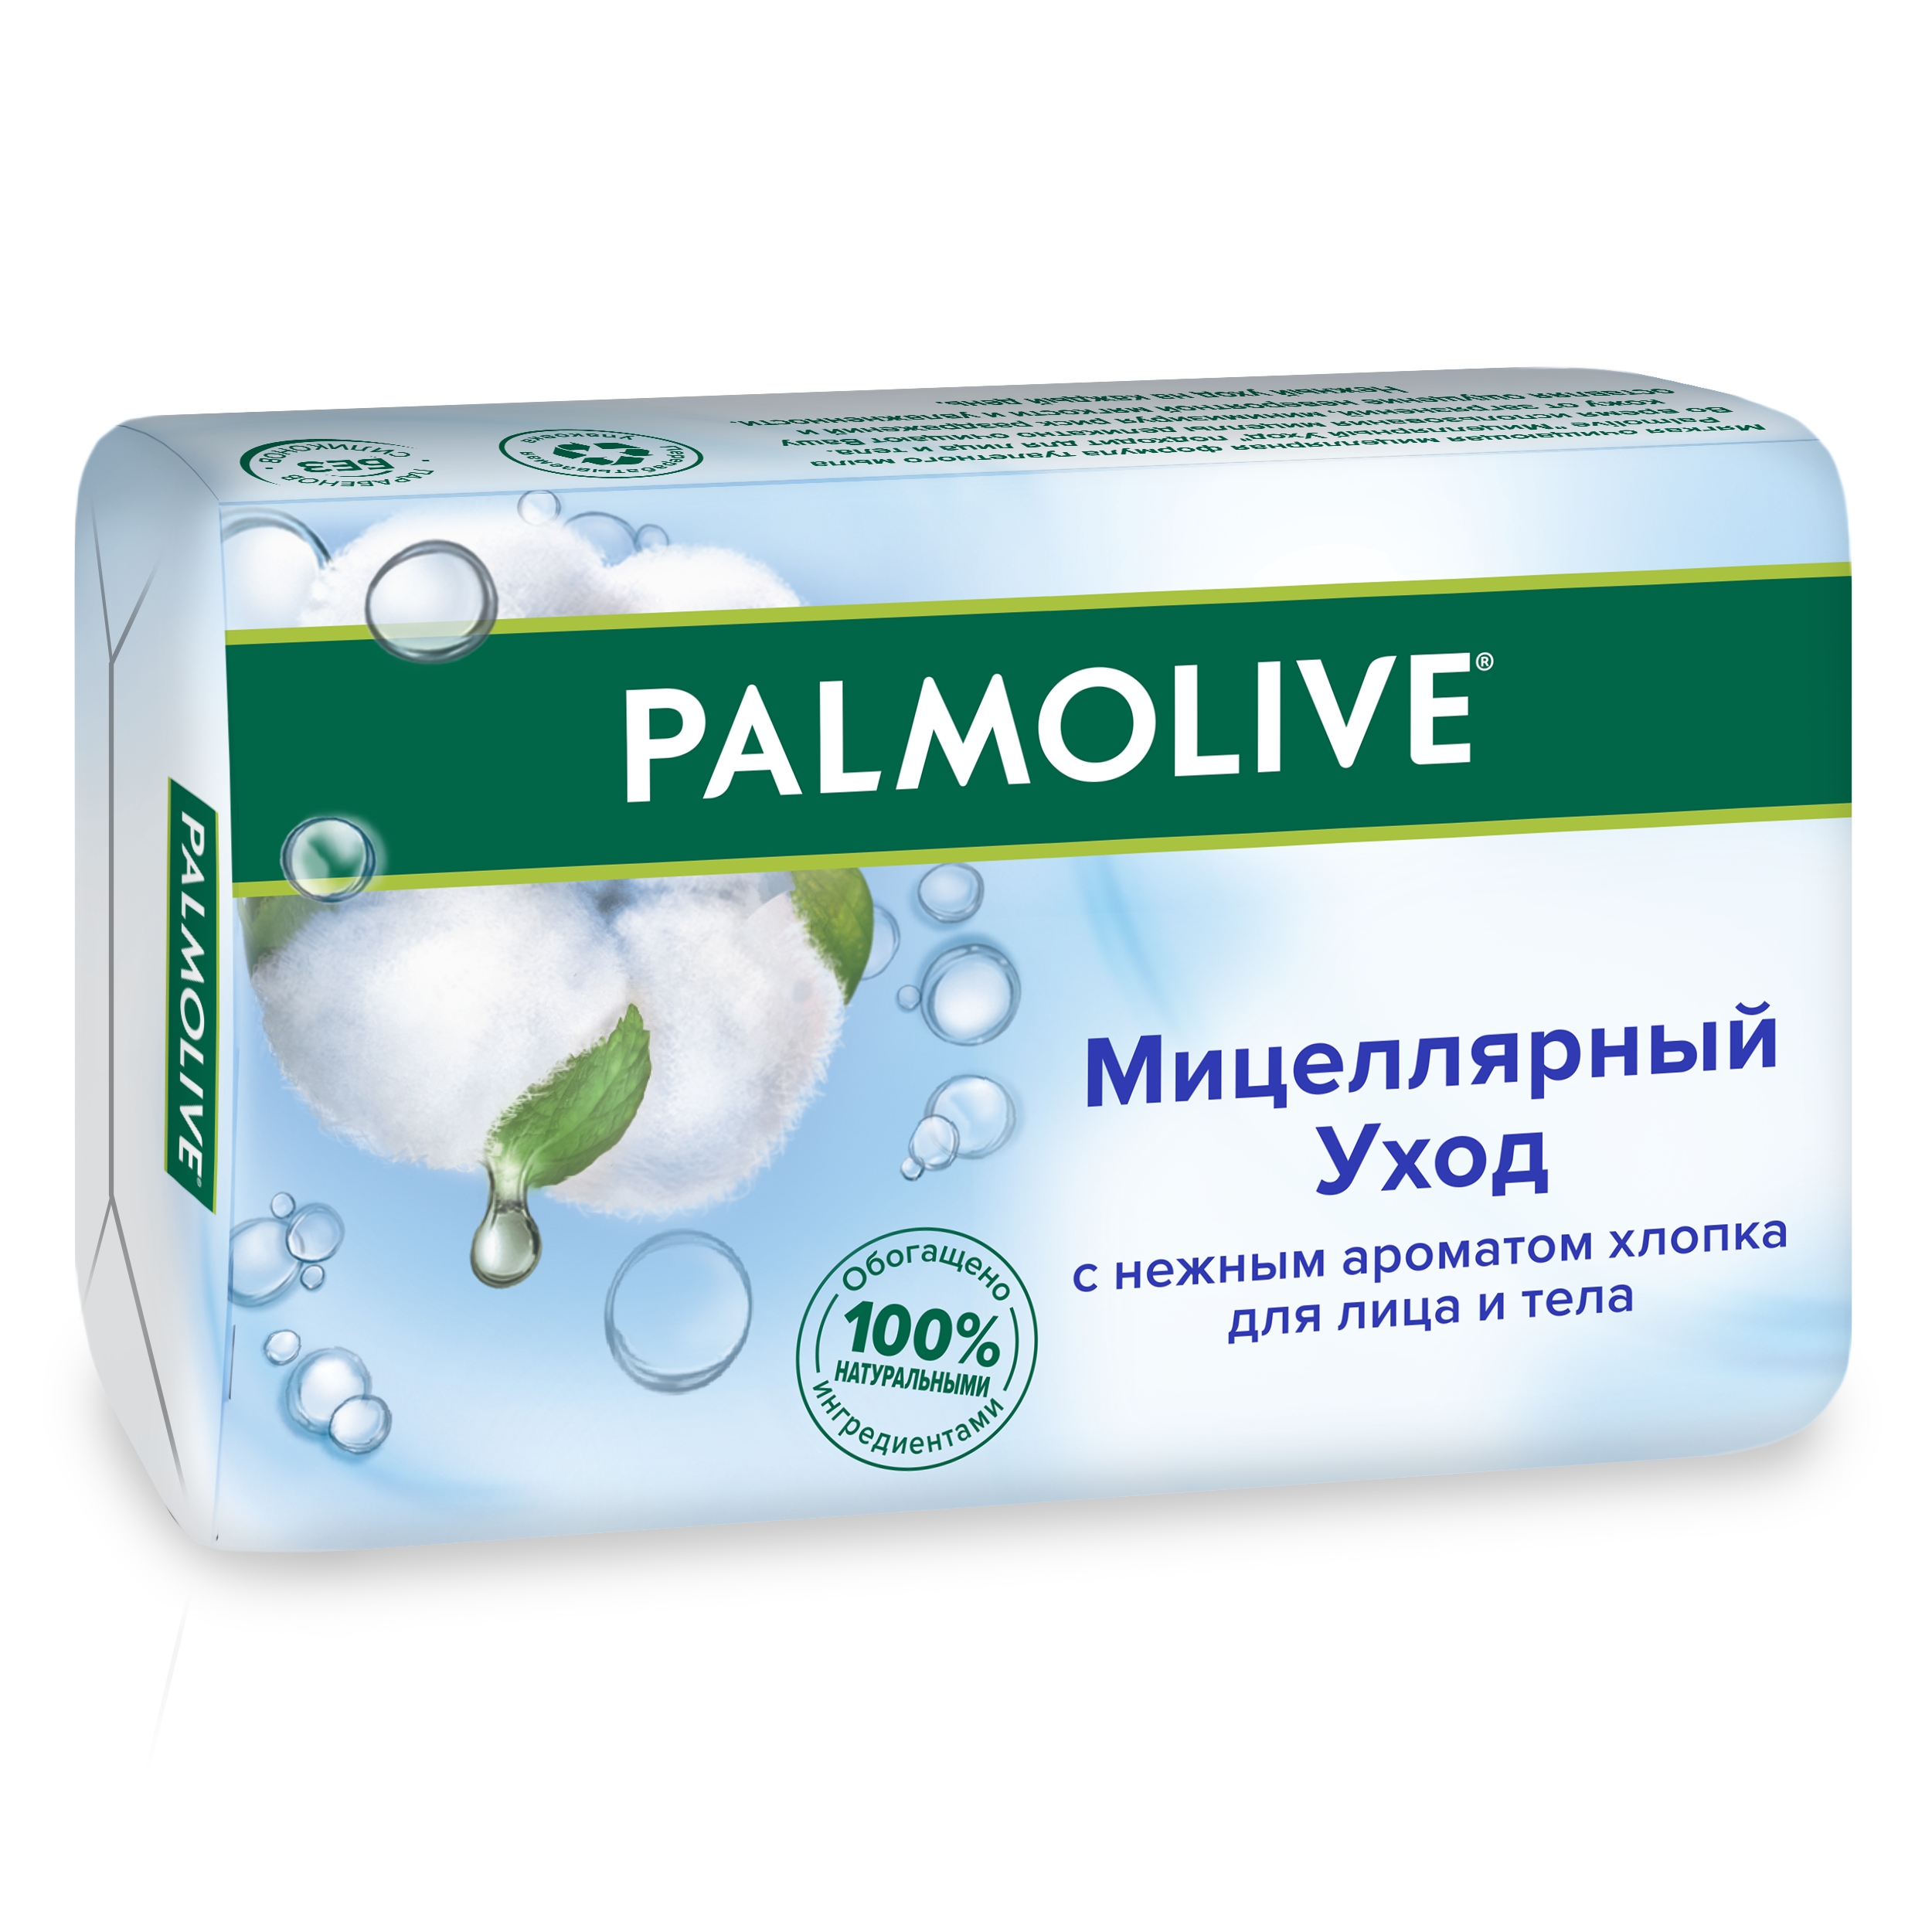 Мыло Palmolive Мицеллярный уход 90г